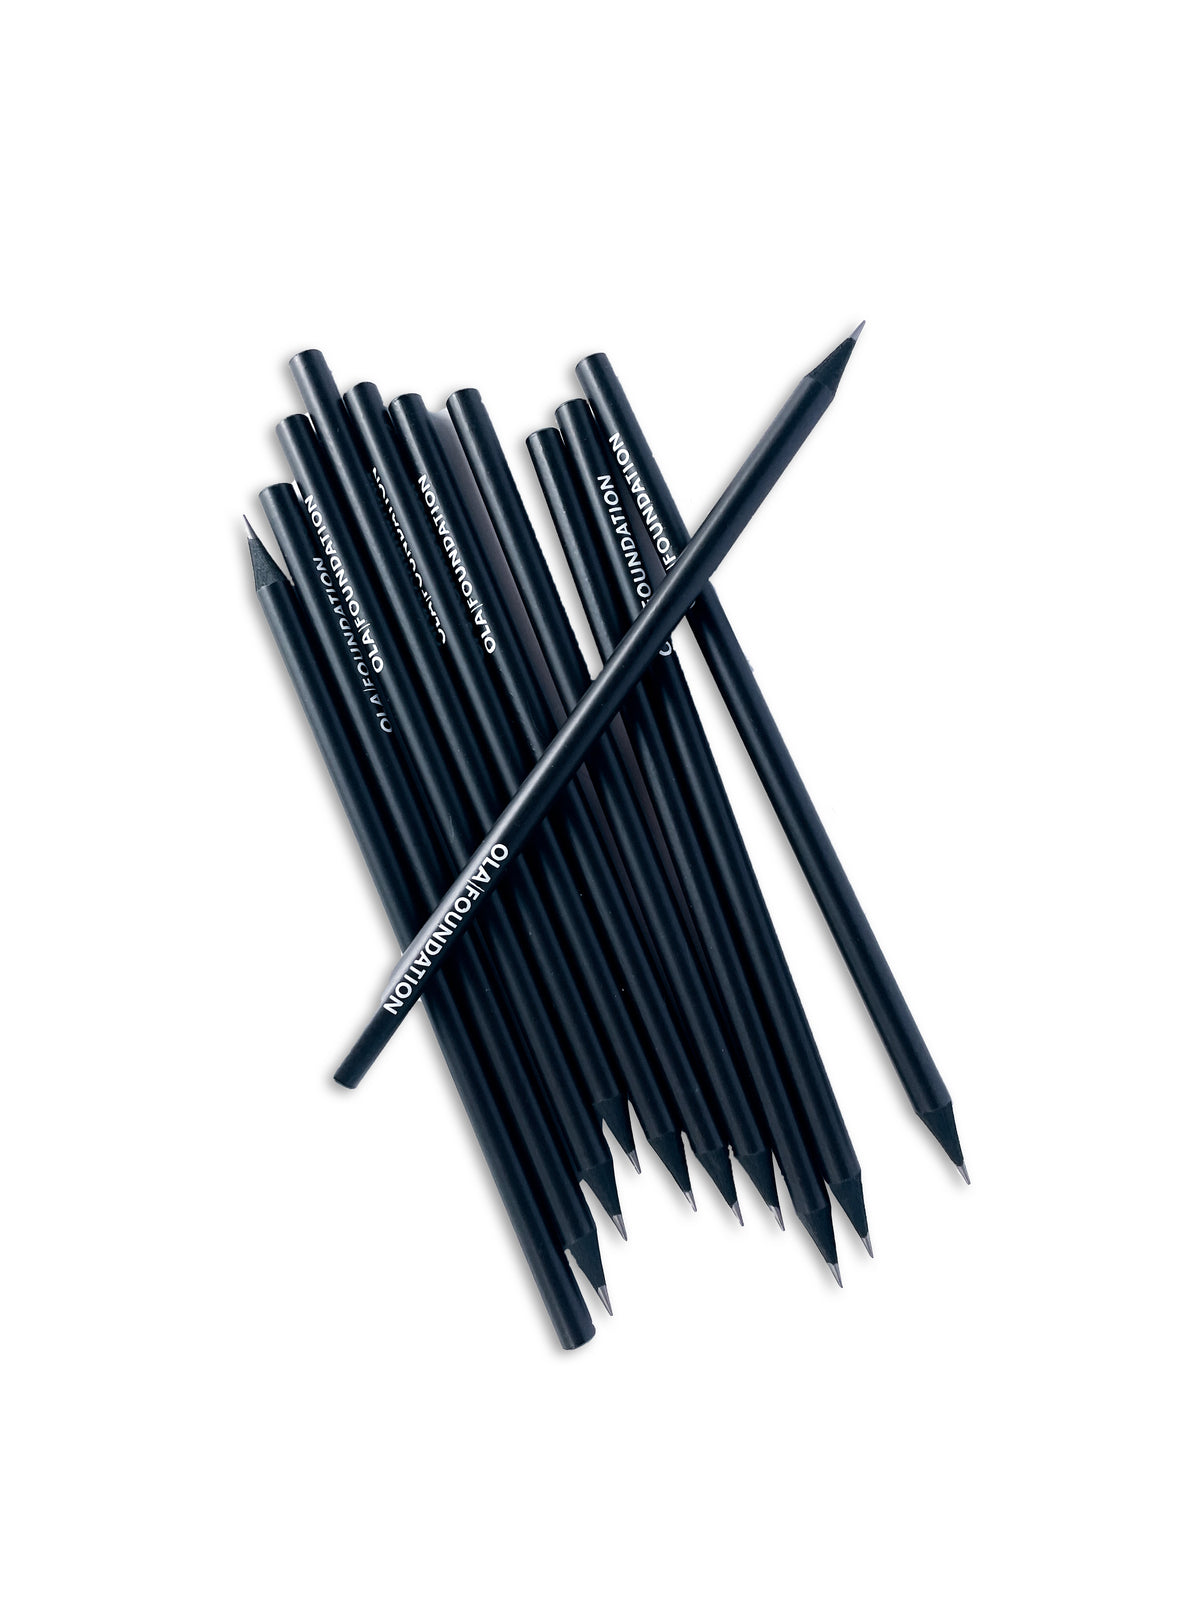 Set of 5 black wooden pencils